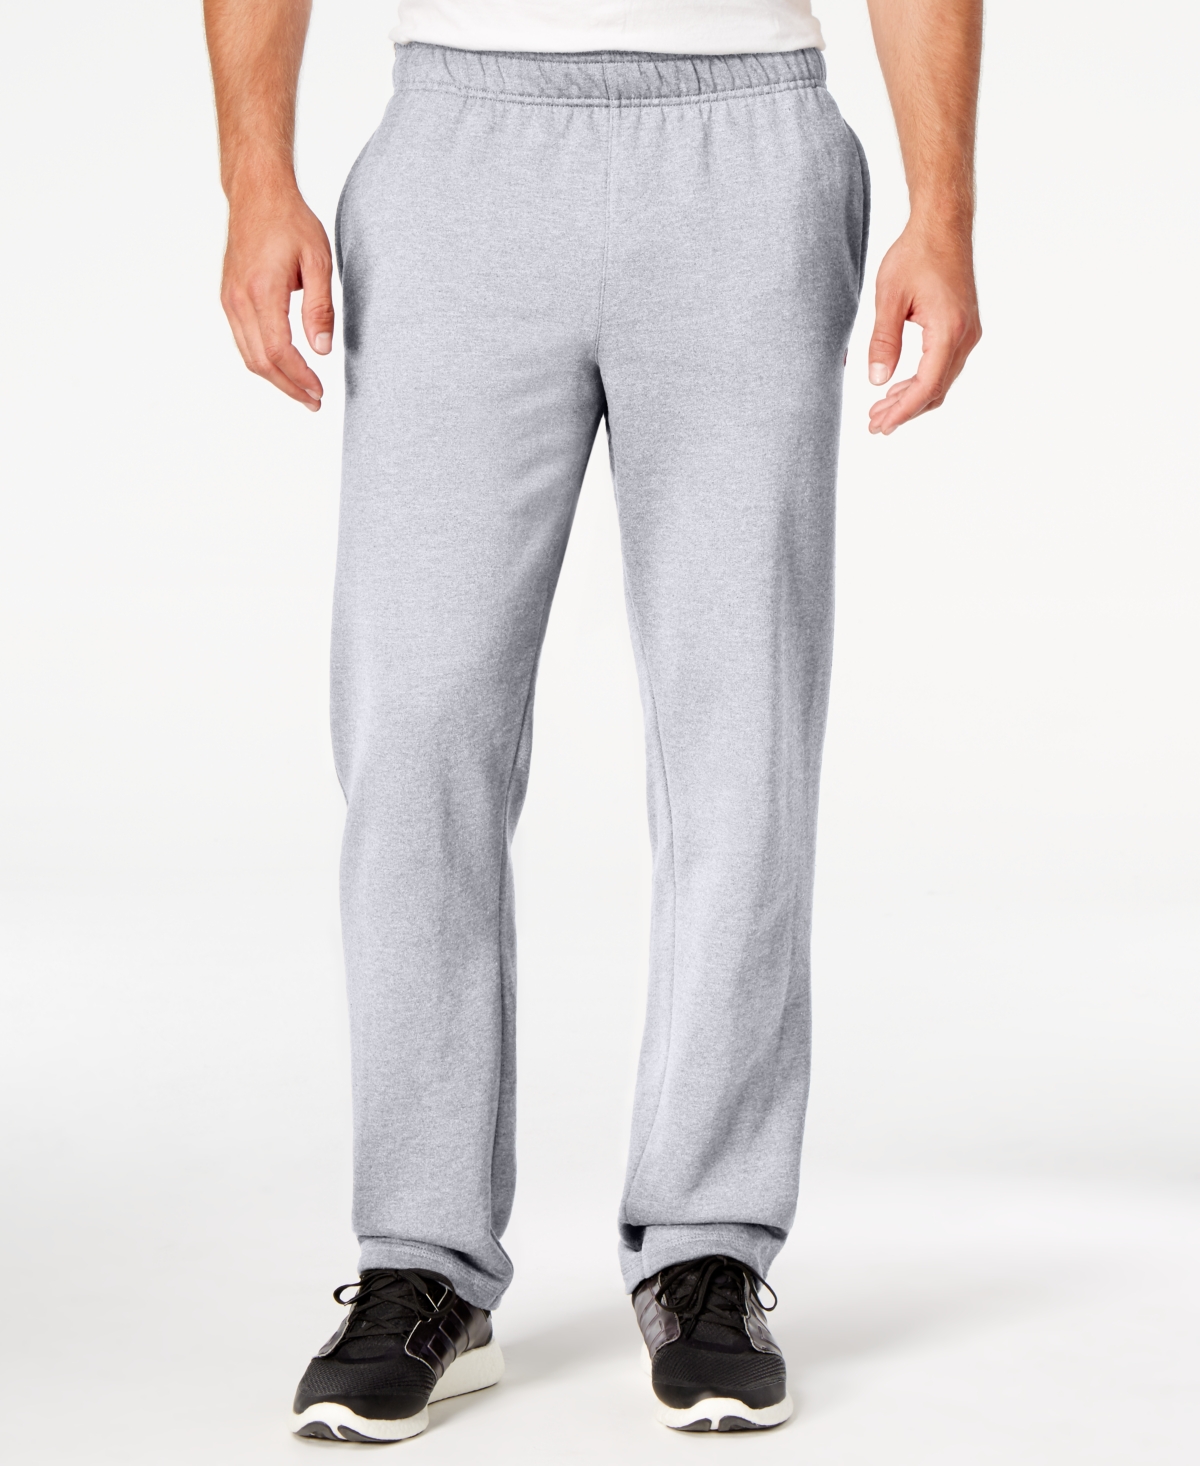 Men's Powerblend Fleece Pants - Oxford Gray